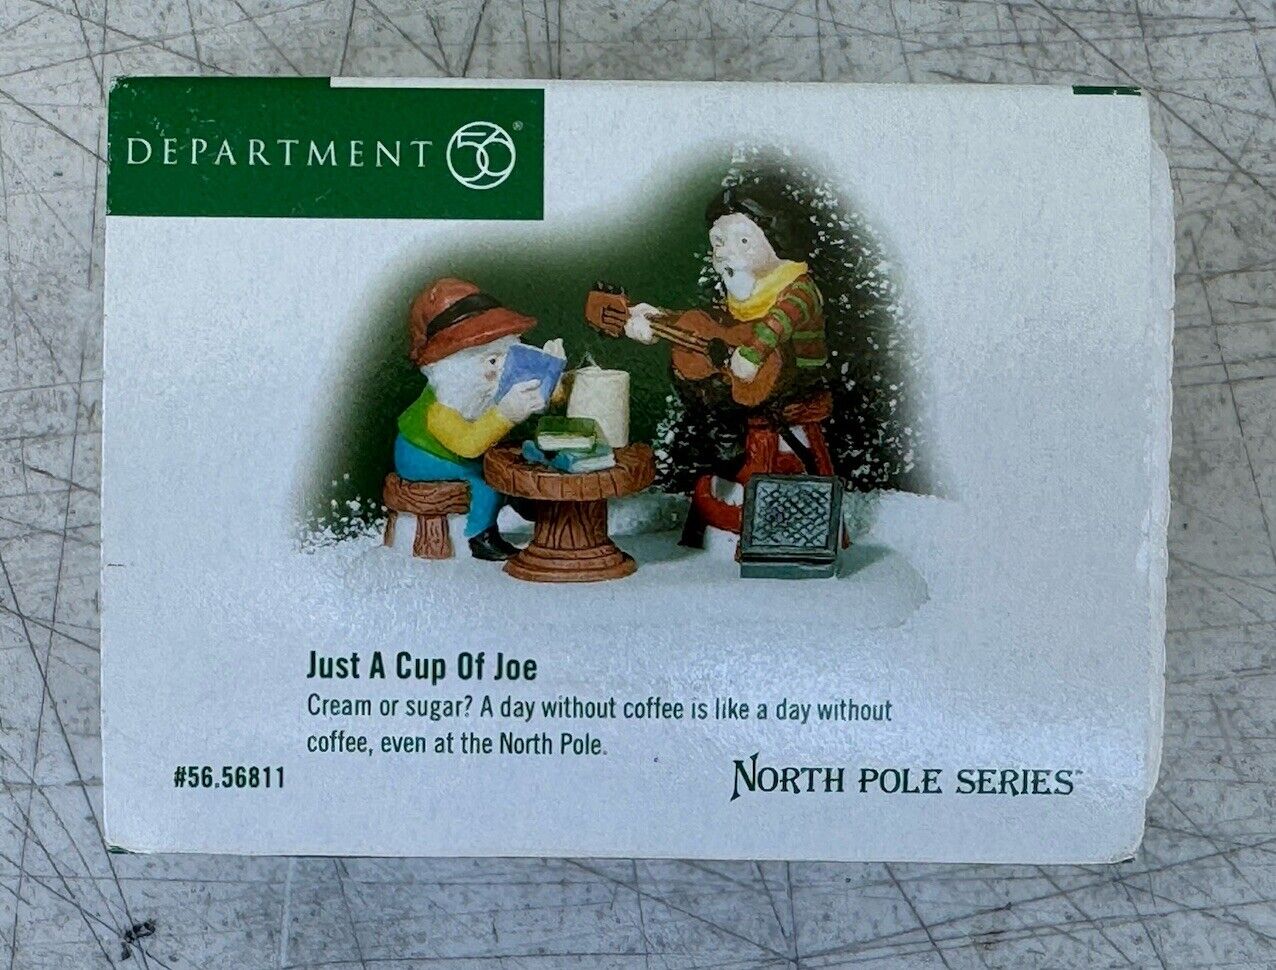 Dept 56  North Pole Series Village Just a cup of Joe 56.56811 Figurine Christmas